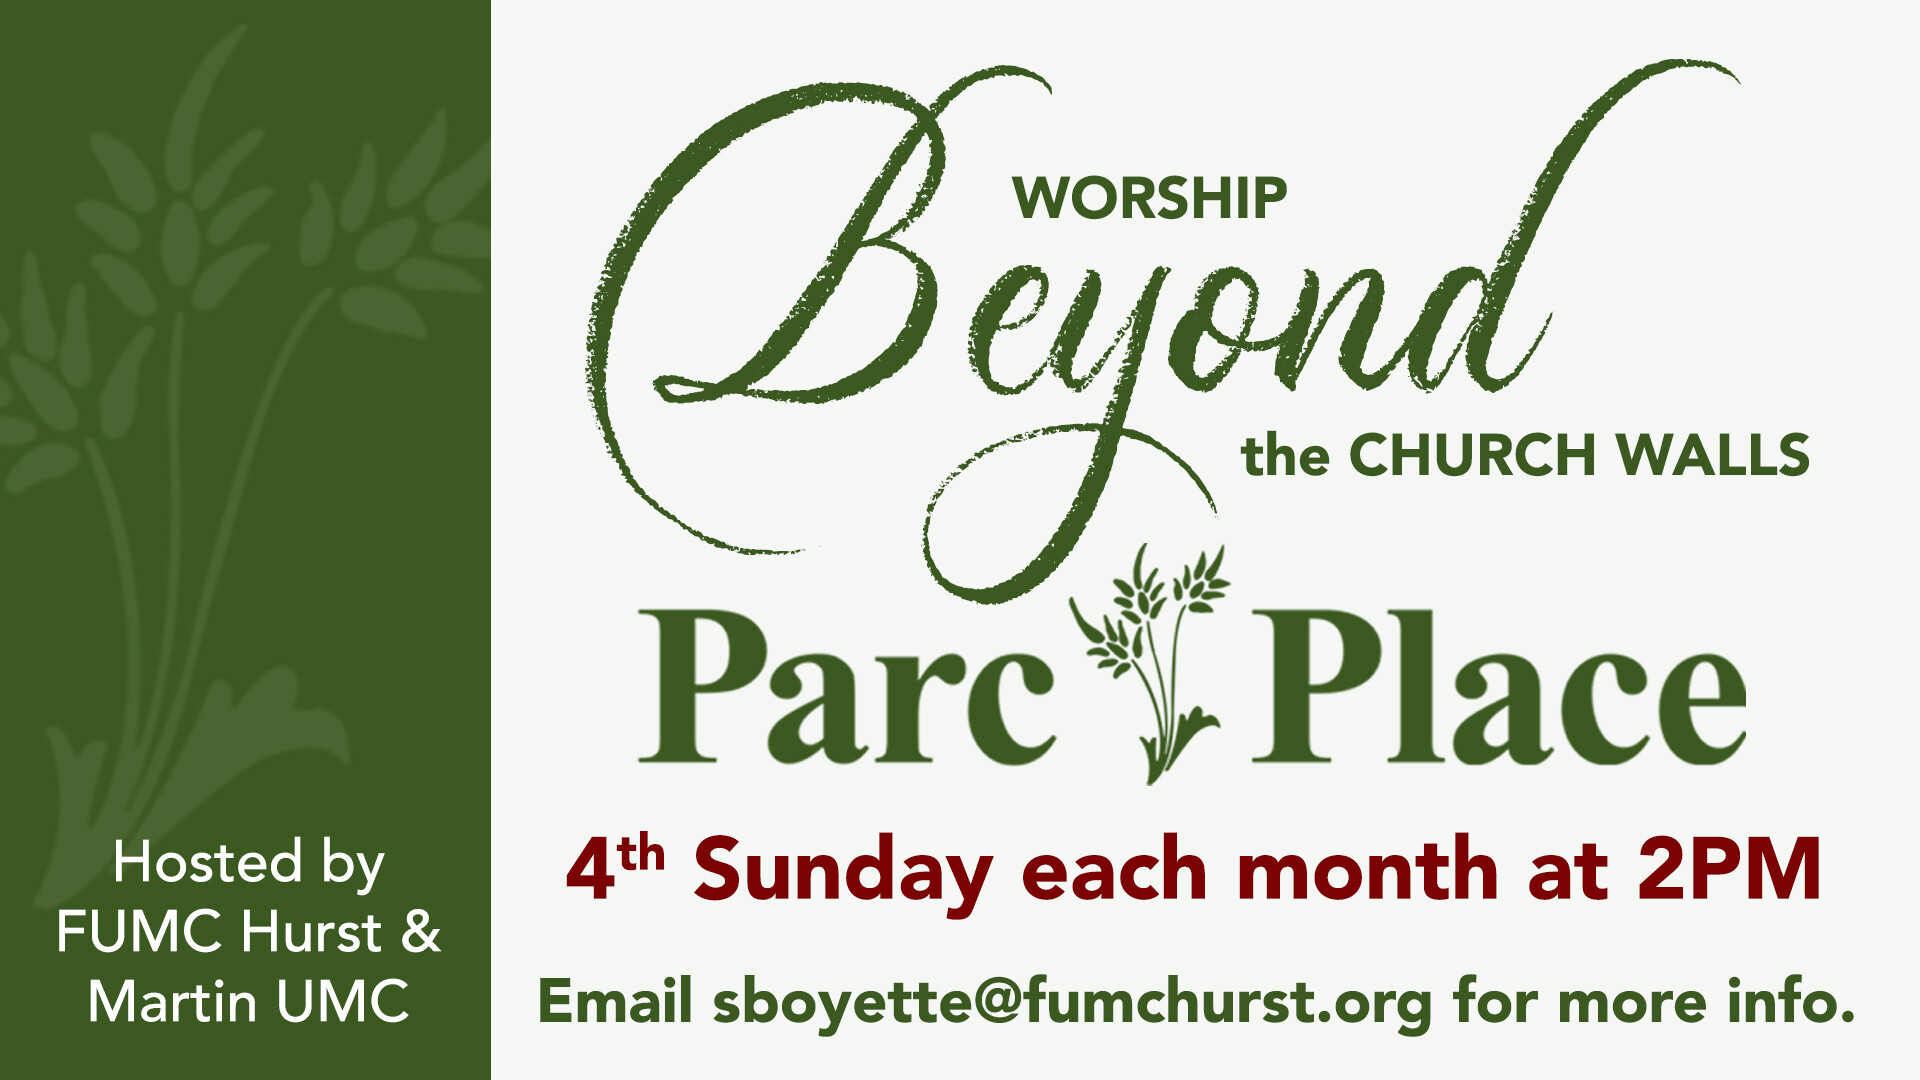 Parc Place Worship Service - Off Campus